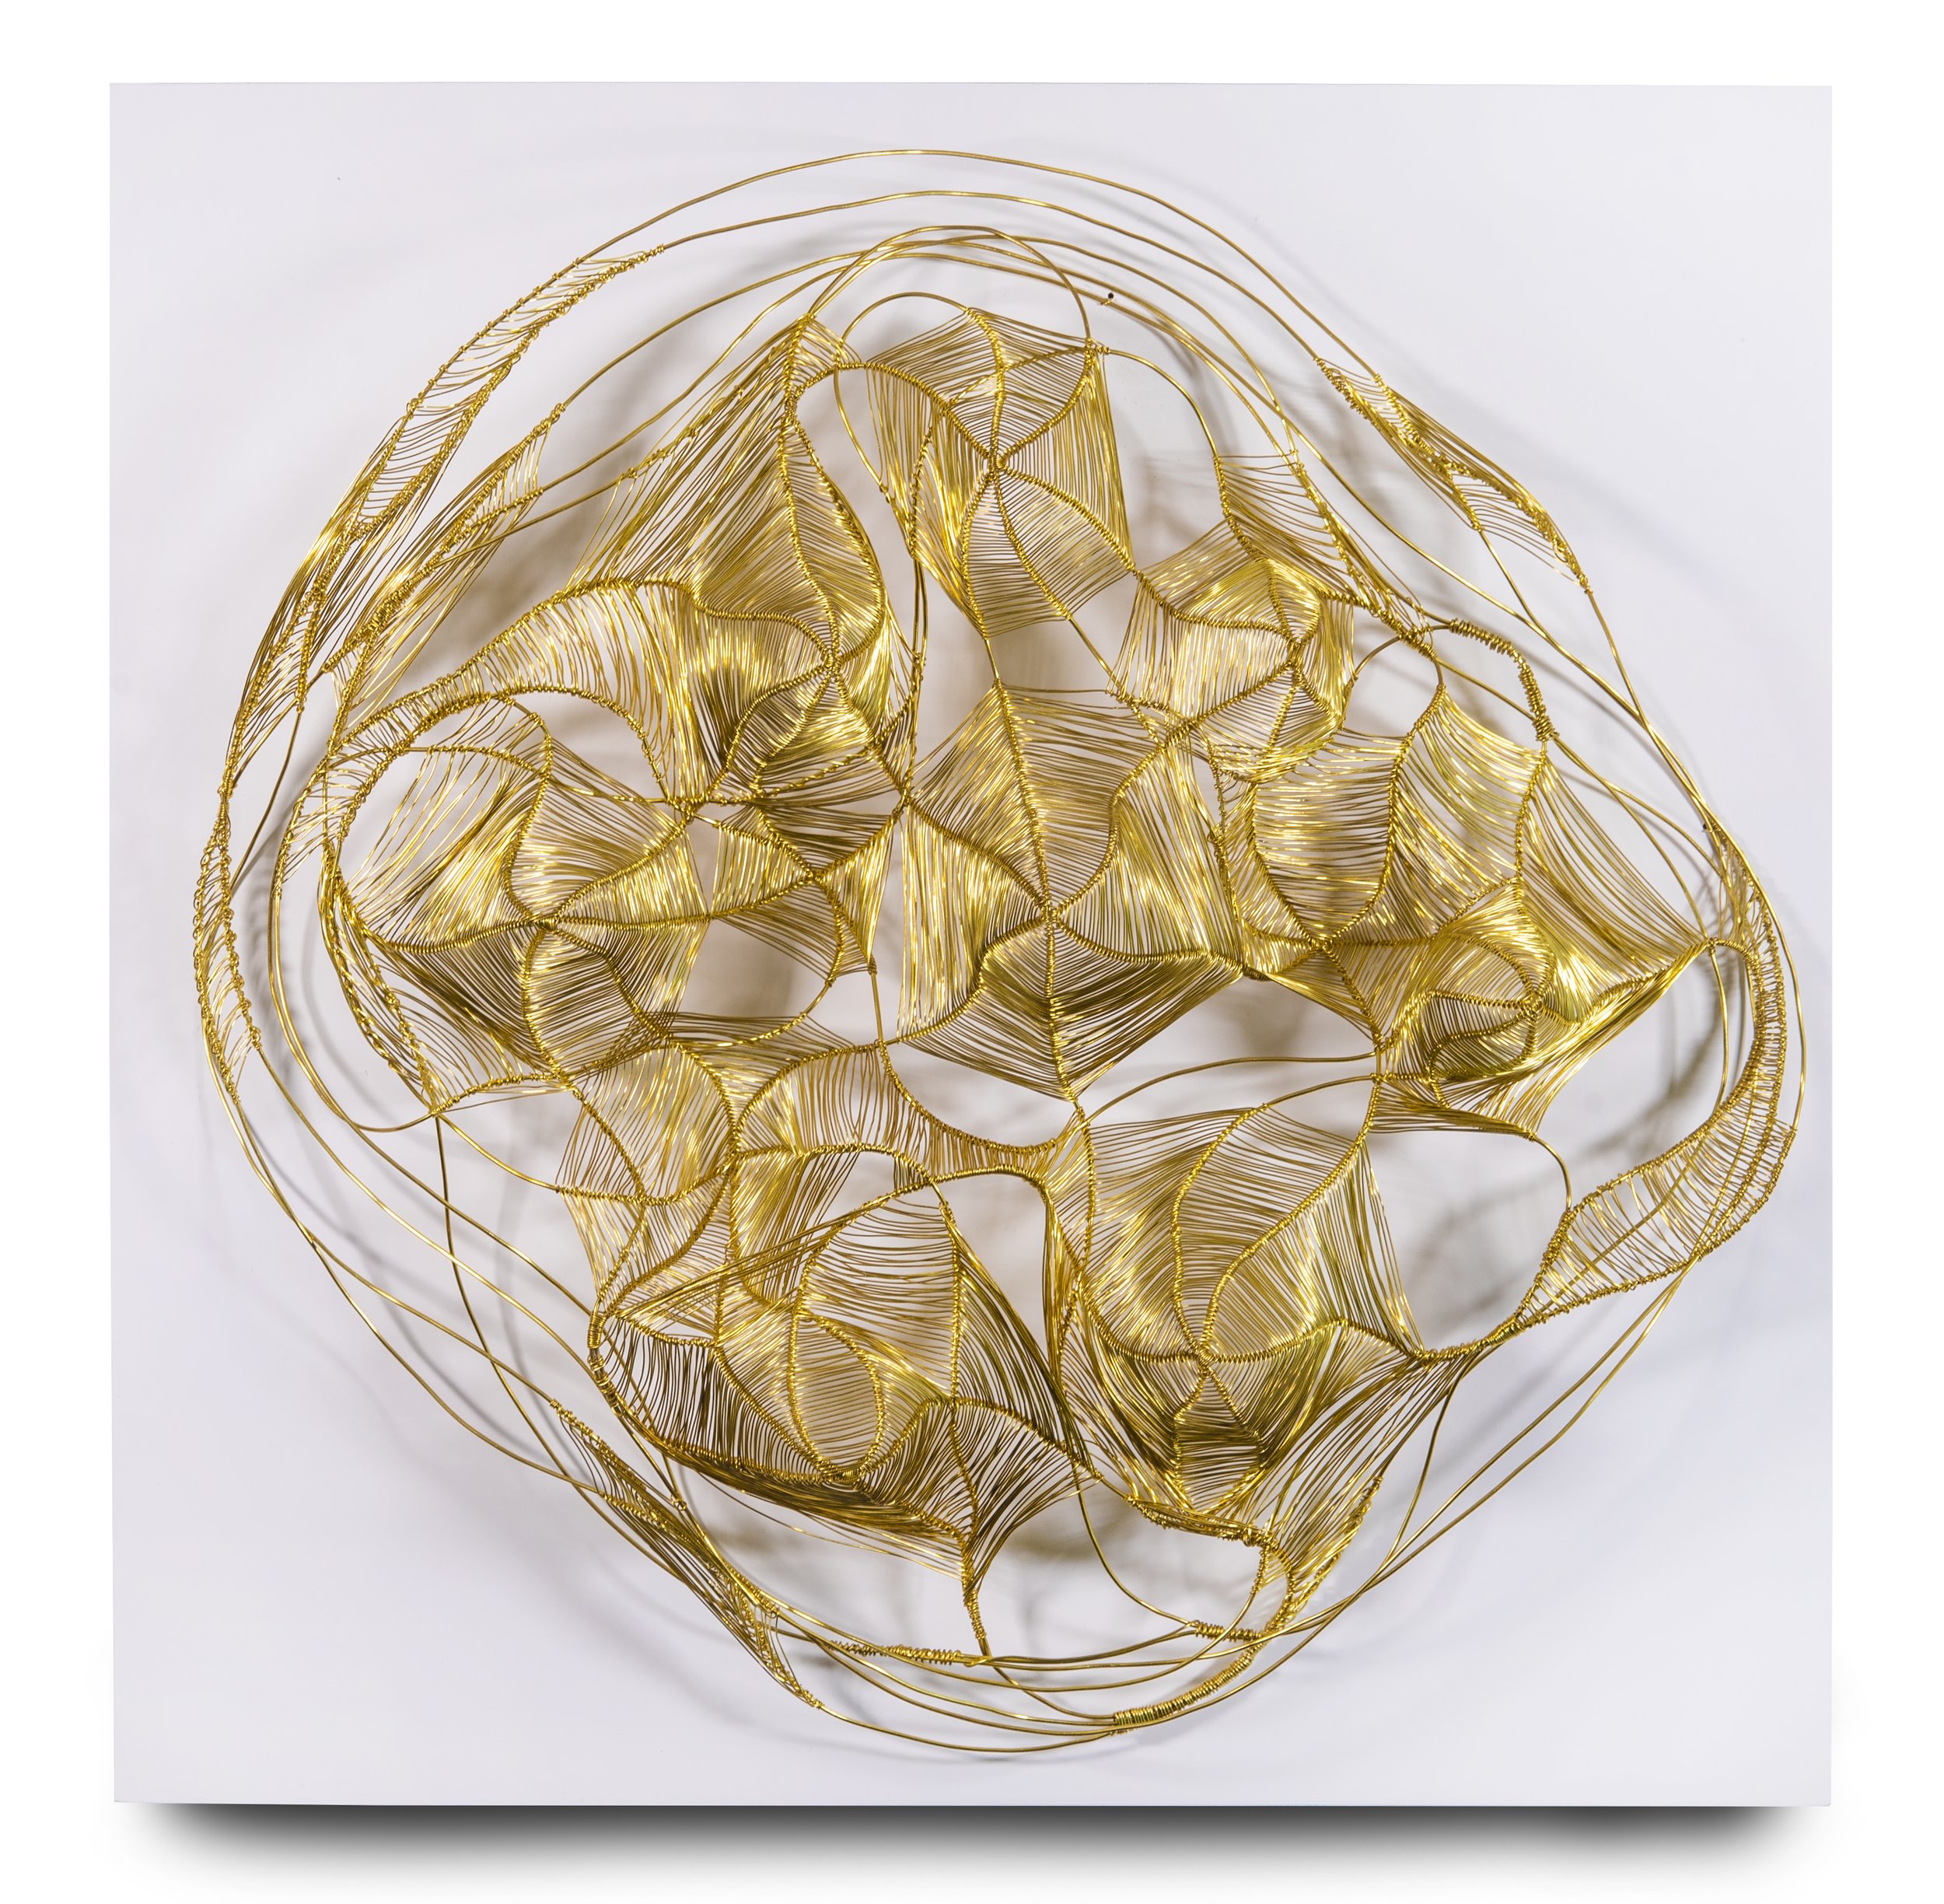   Walk Slowly - Nest in Gold 1 , brass wire, 18” x 18” x 7” 